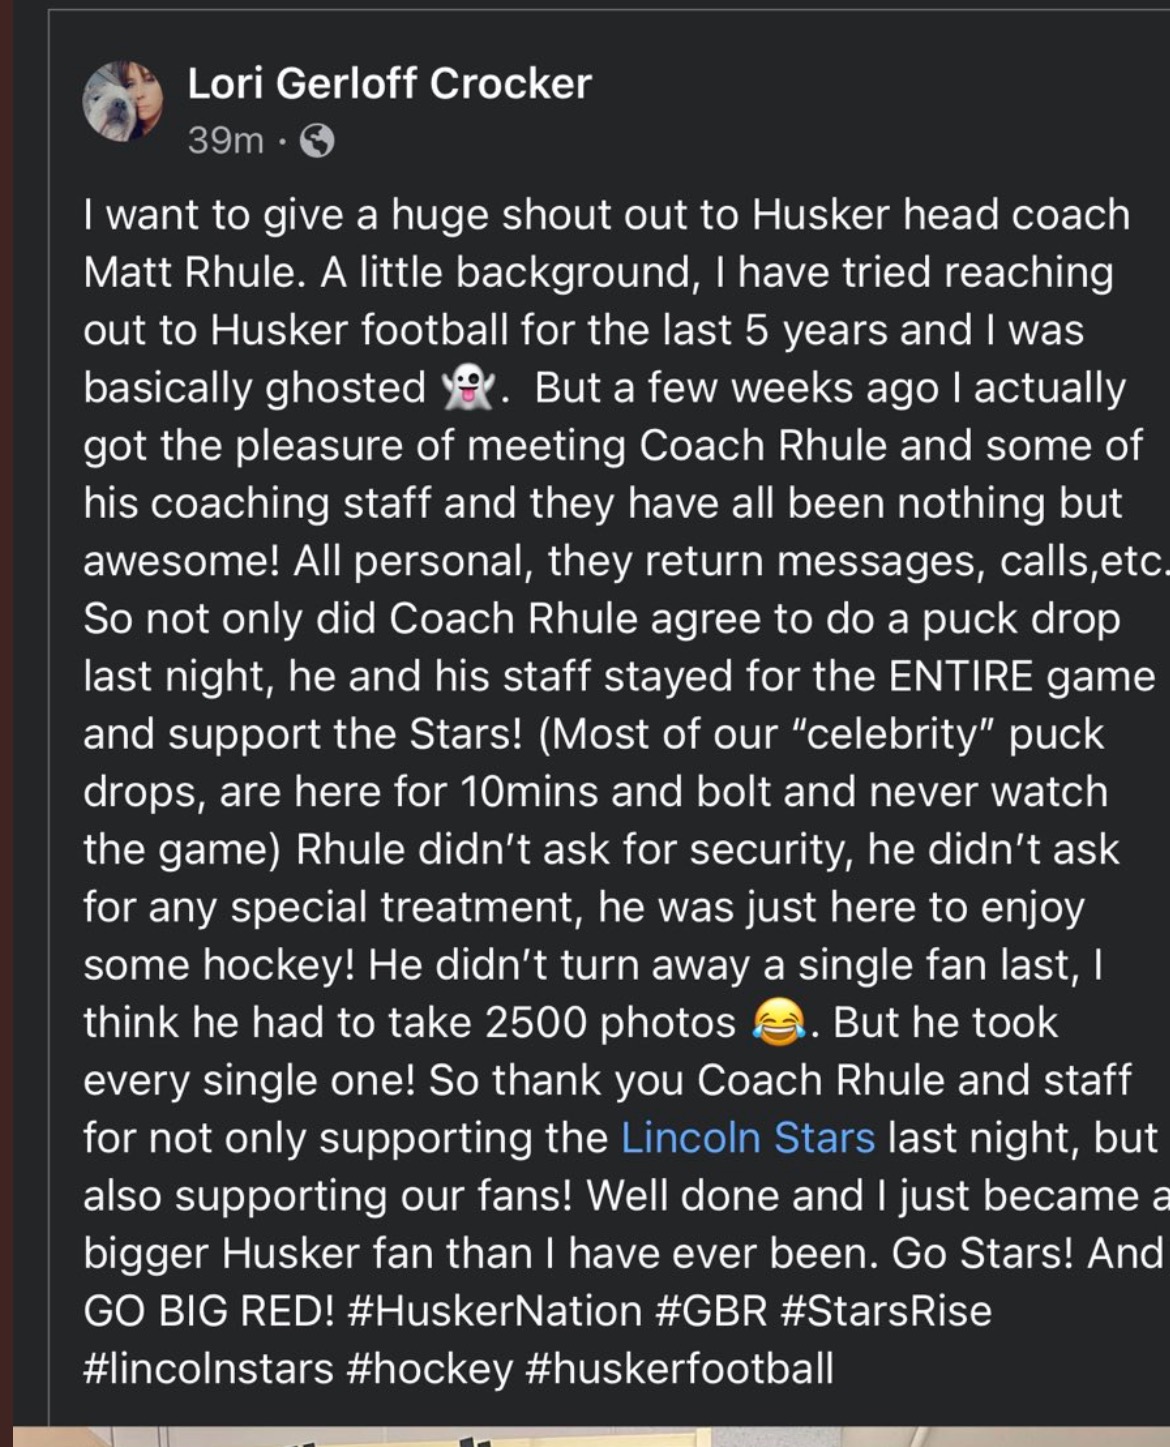 Matt Rhule Hired As New Husker Head Coach Husker Football